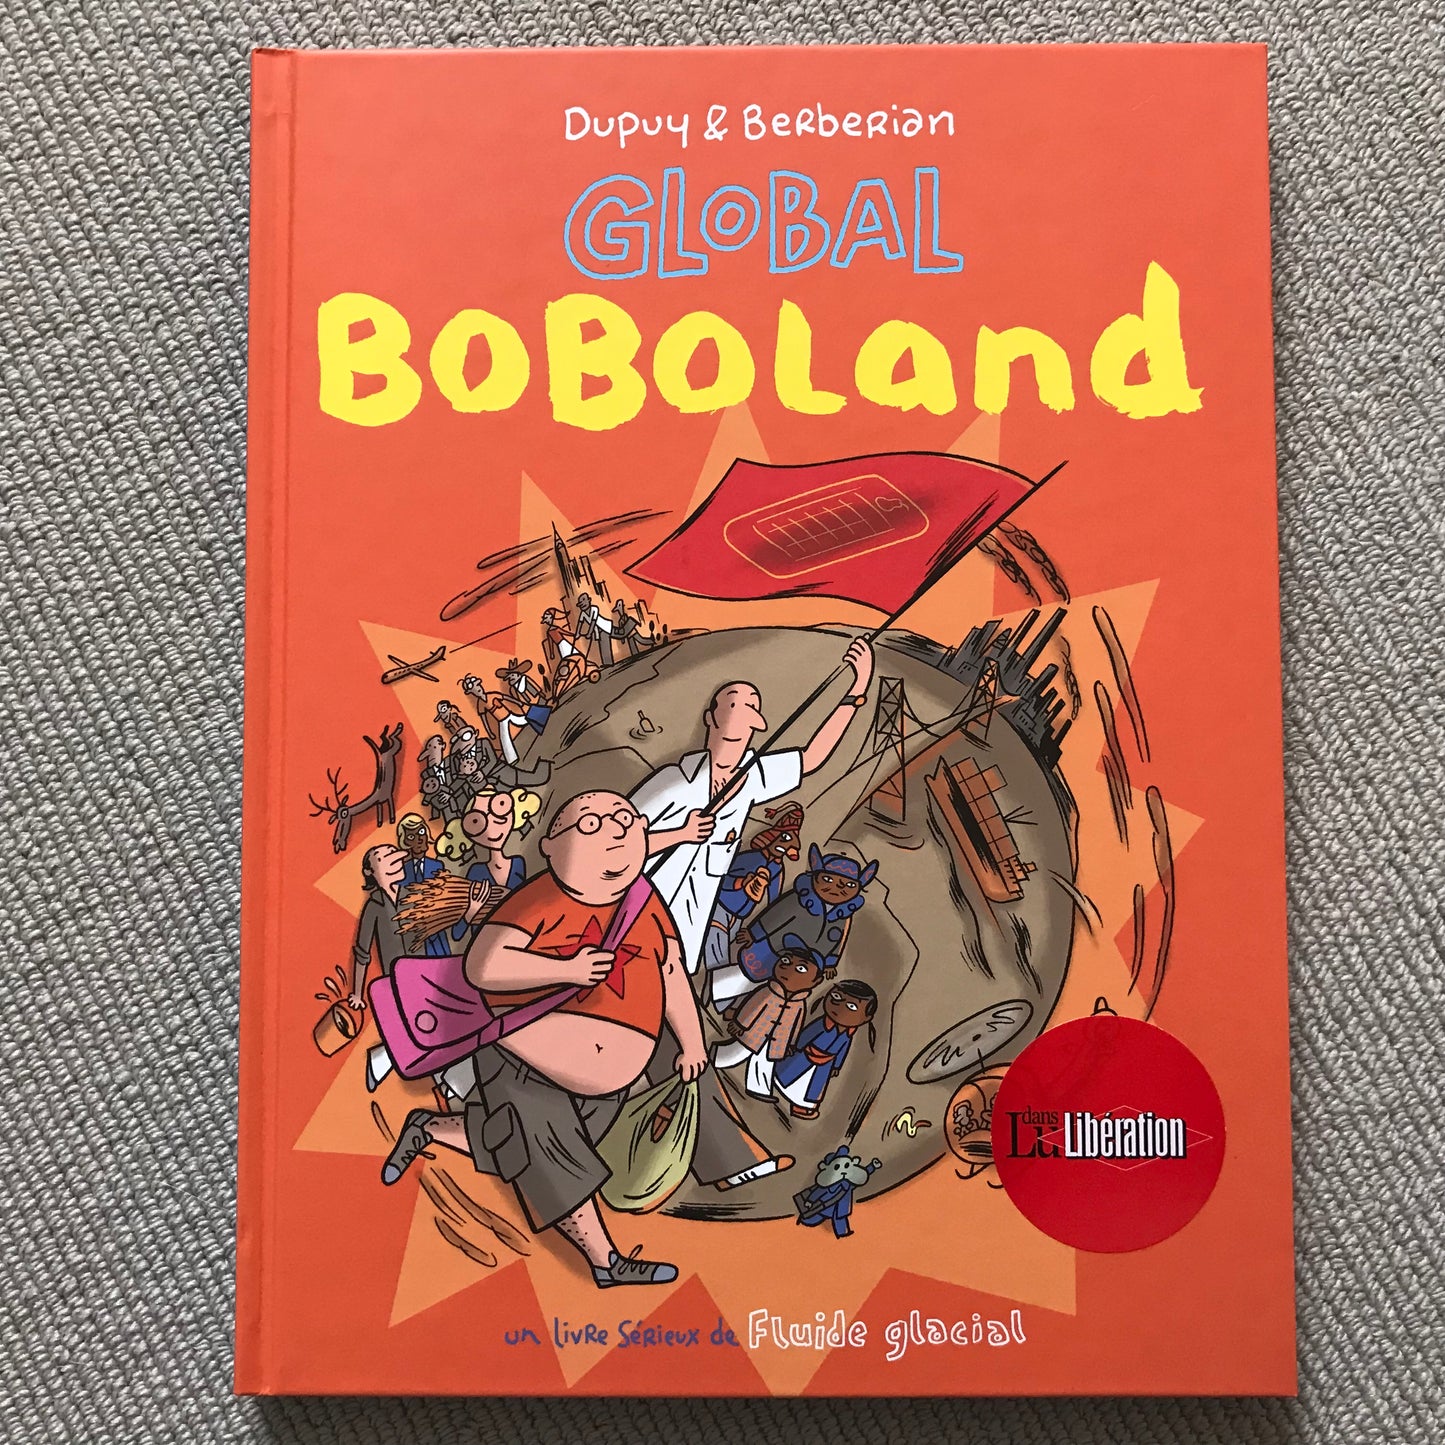 Global Boboland - Dupuy & Berberian